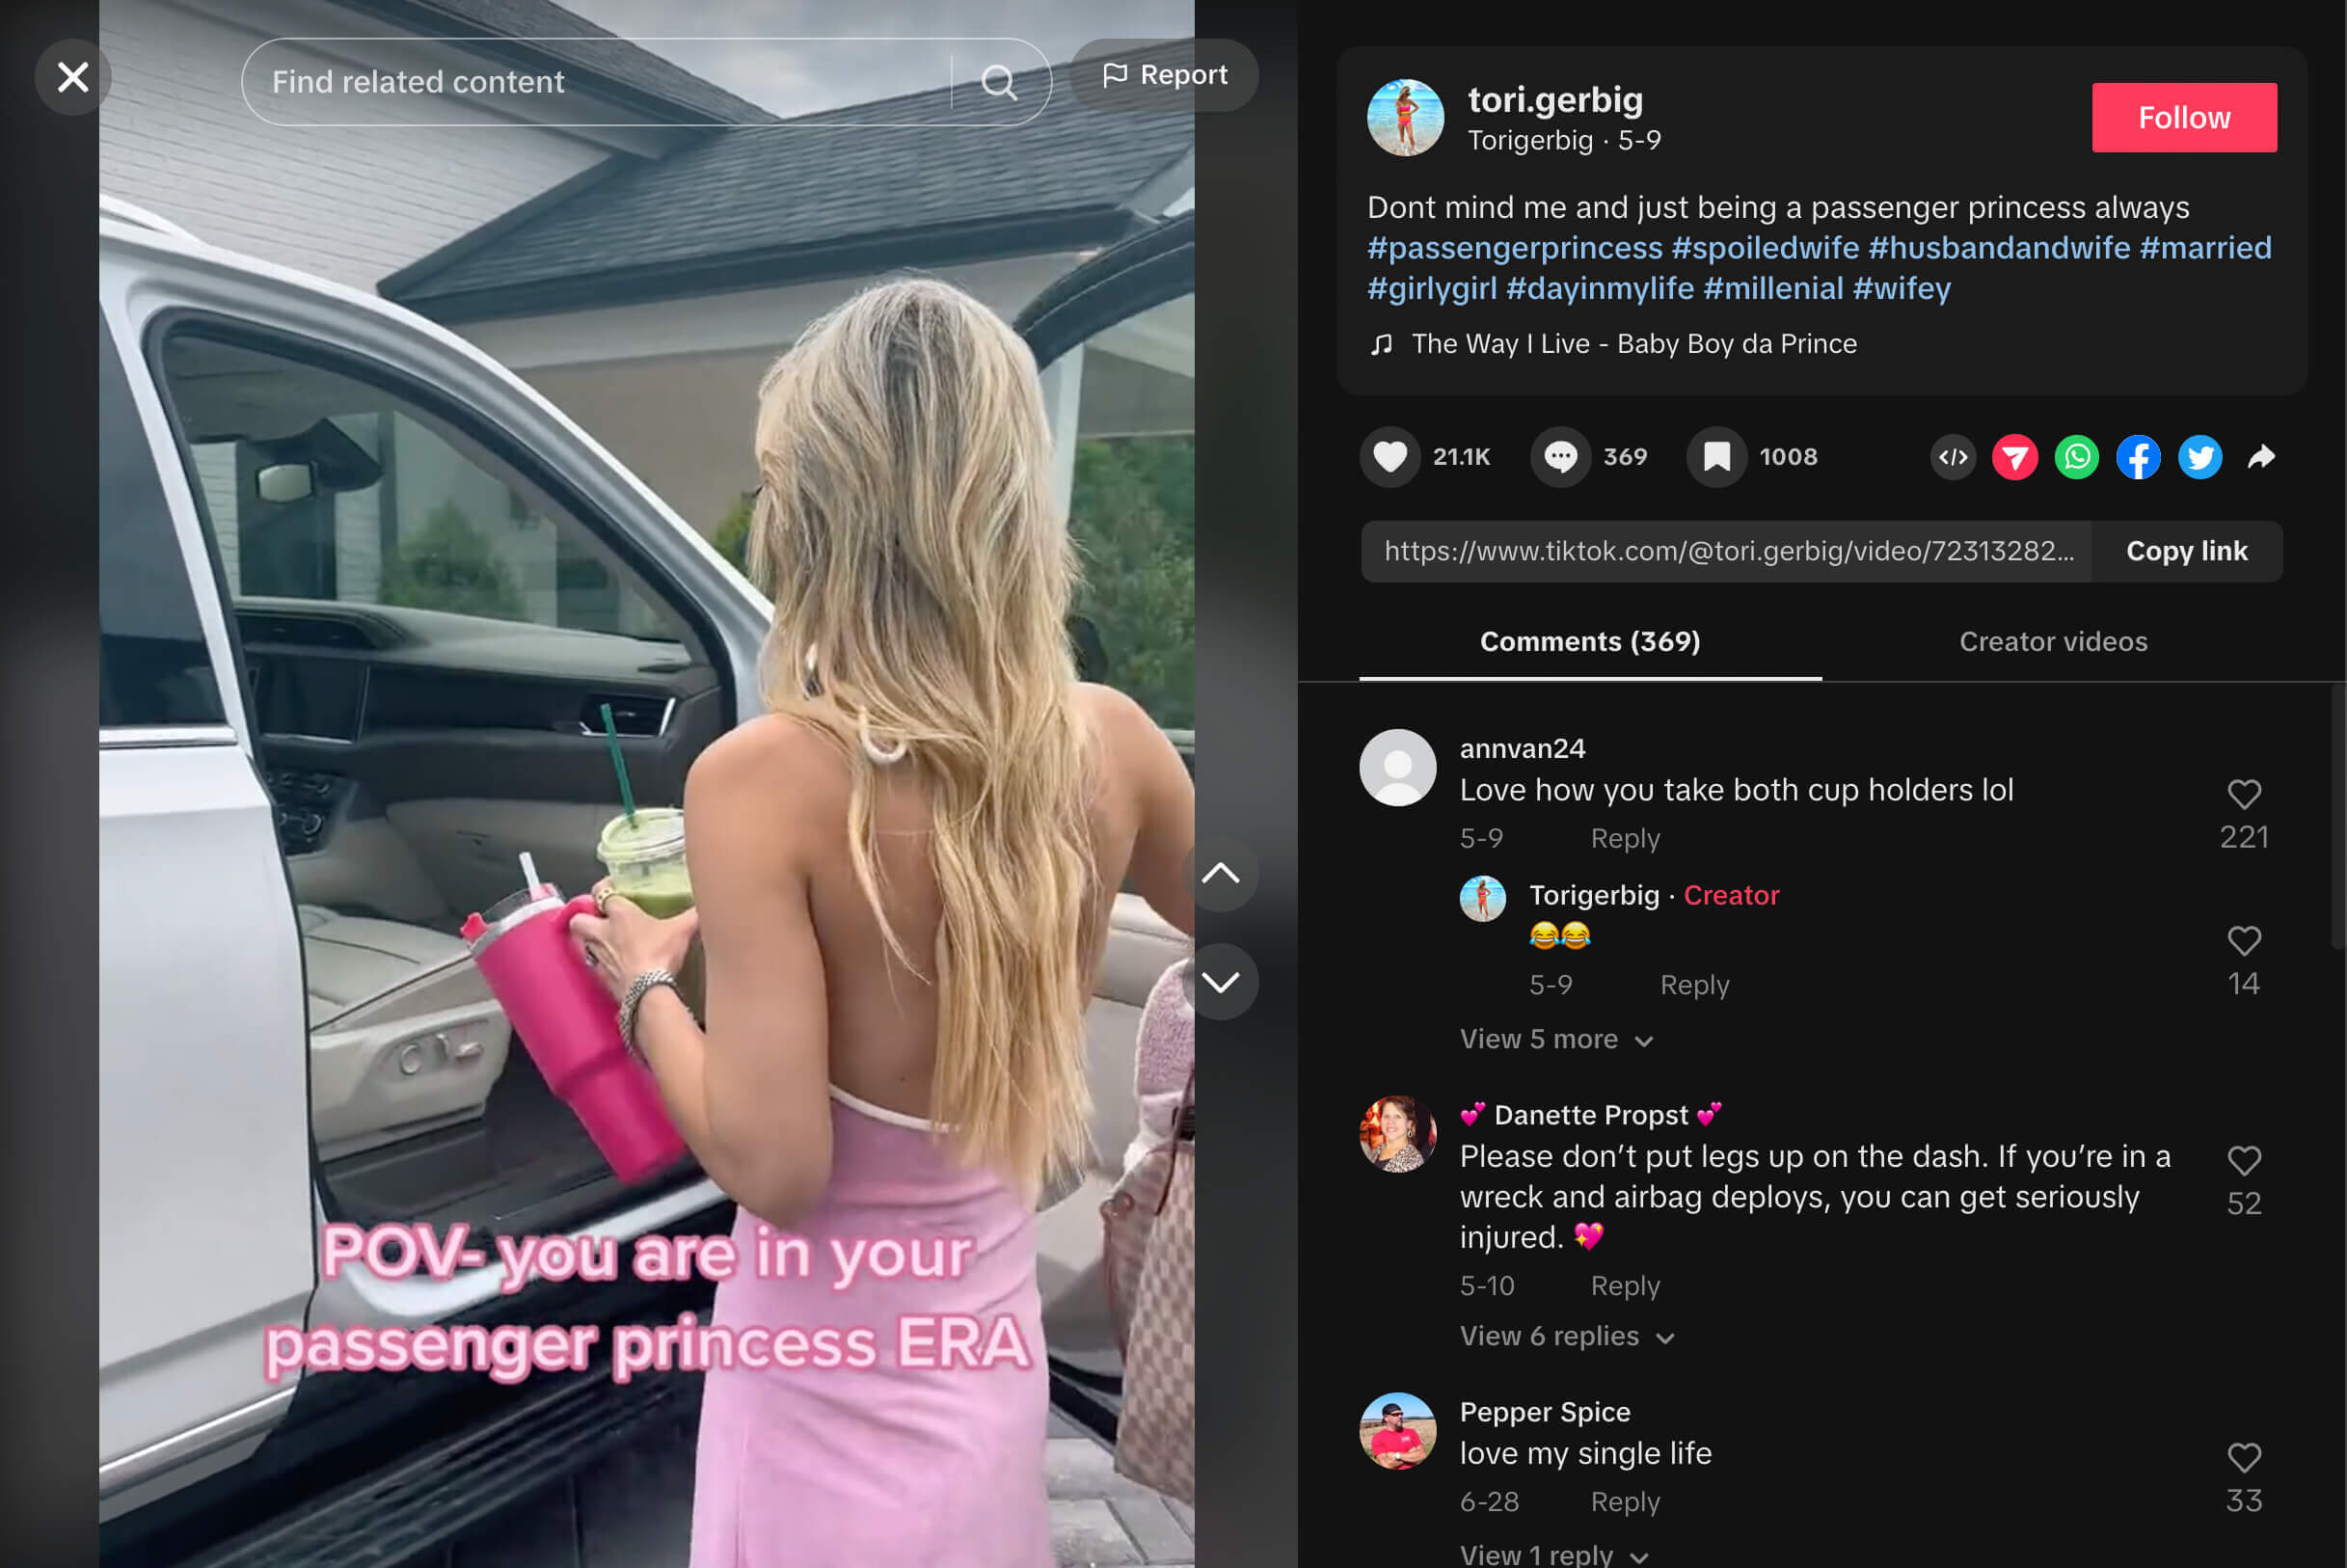 Passenger princess posting about her luxuries on TikTok